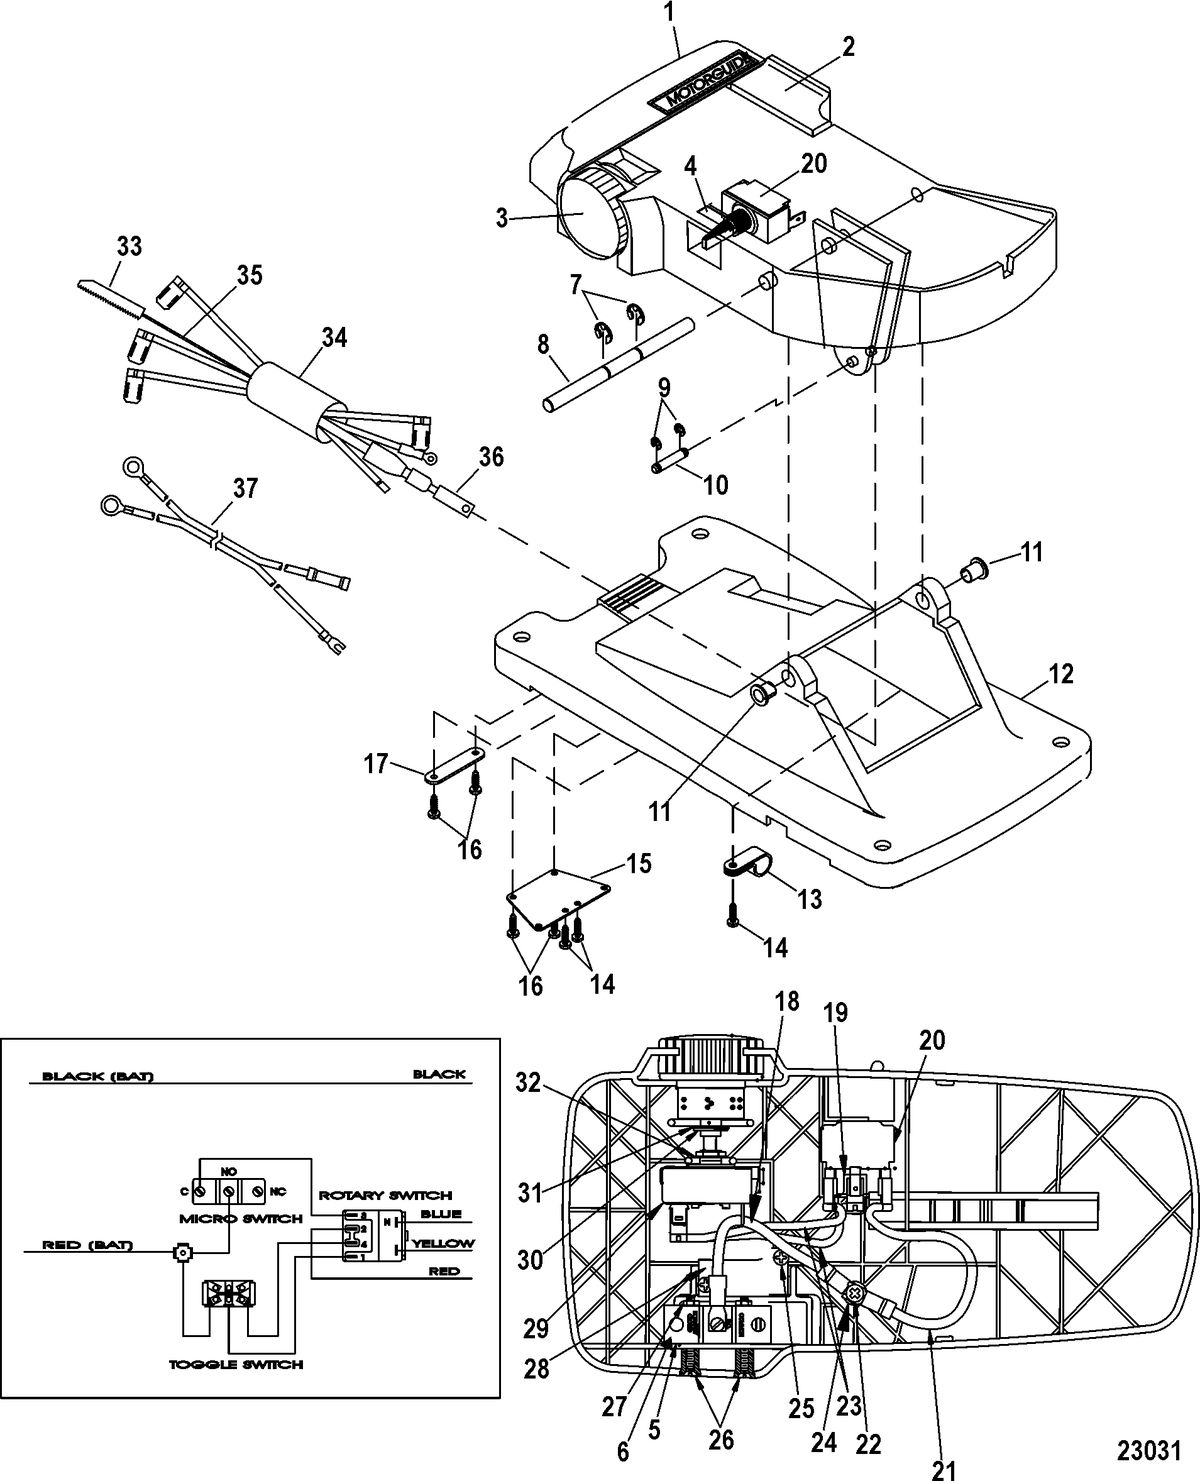 TROLLING MOTOR MOTORGUIDE BULLDOG SERIES Foot Pedal Assembly(M899721T)